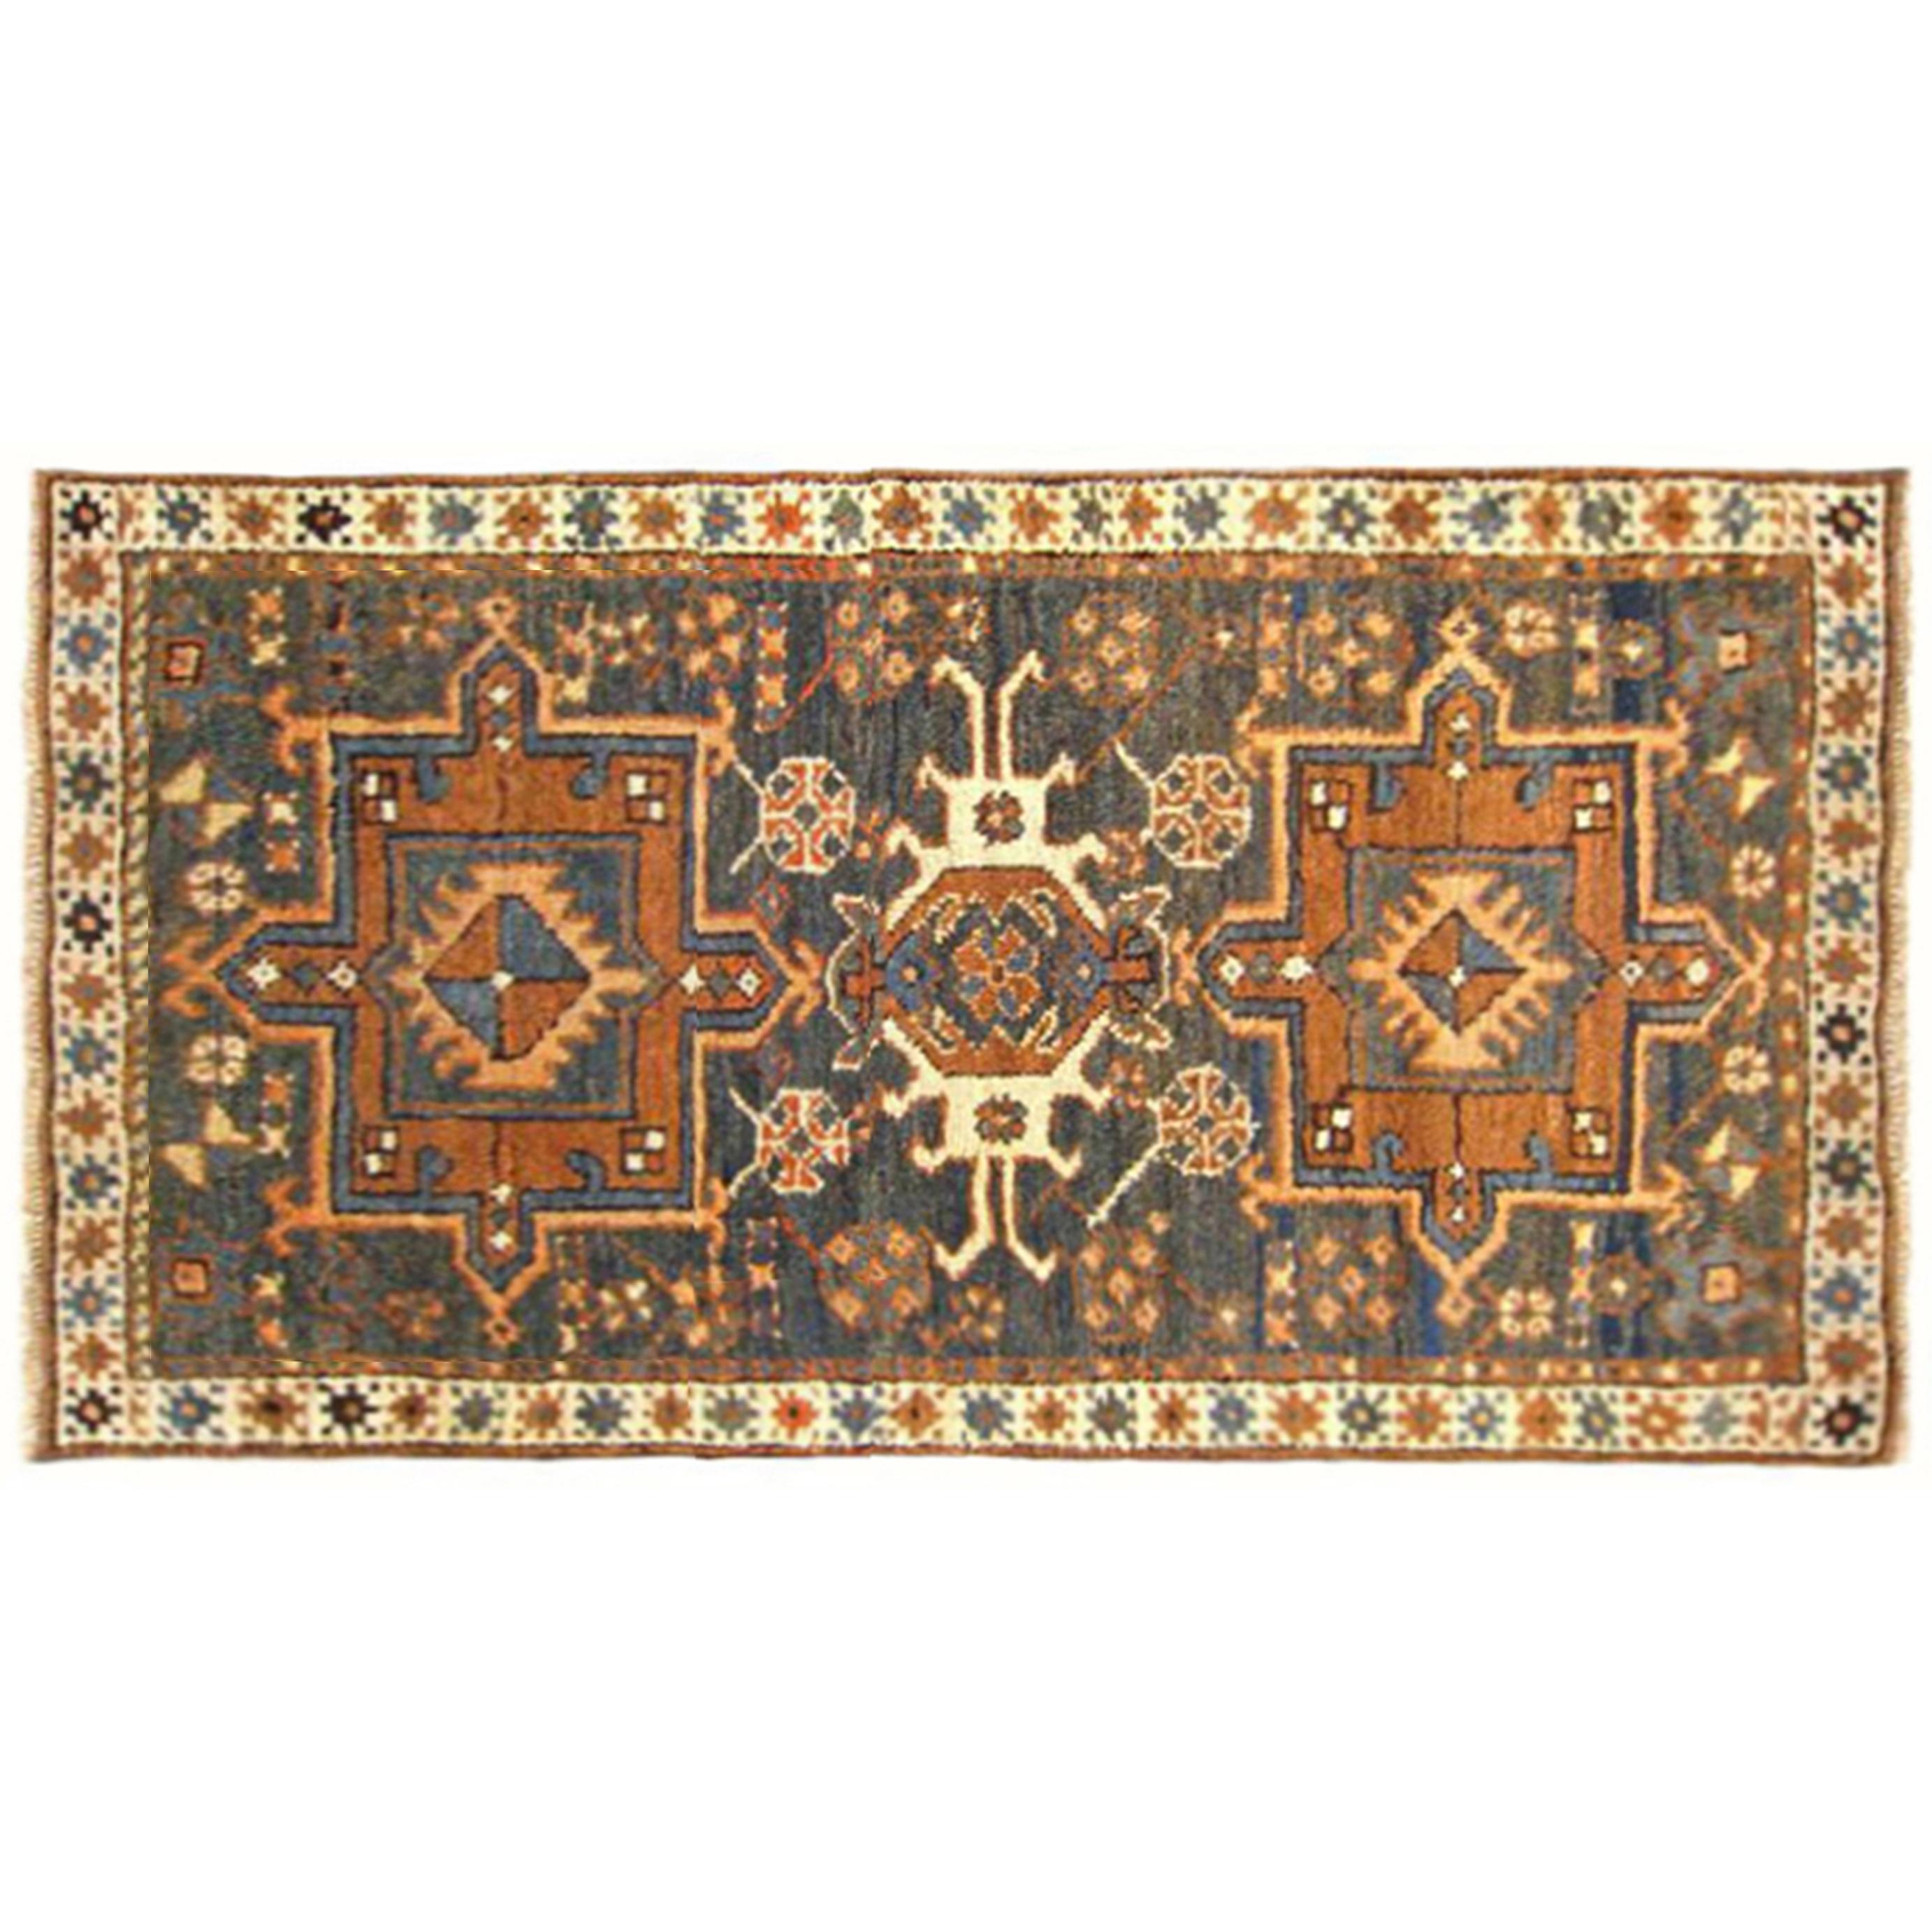 Antique Persian Heriz Karaja Oriental Rug, in Small Size, with Blue Green Field